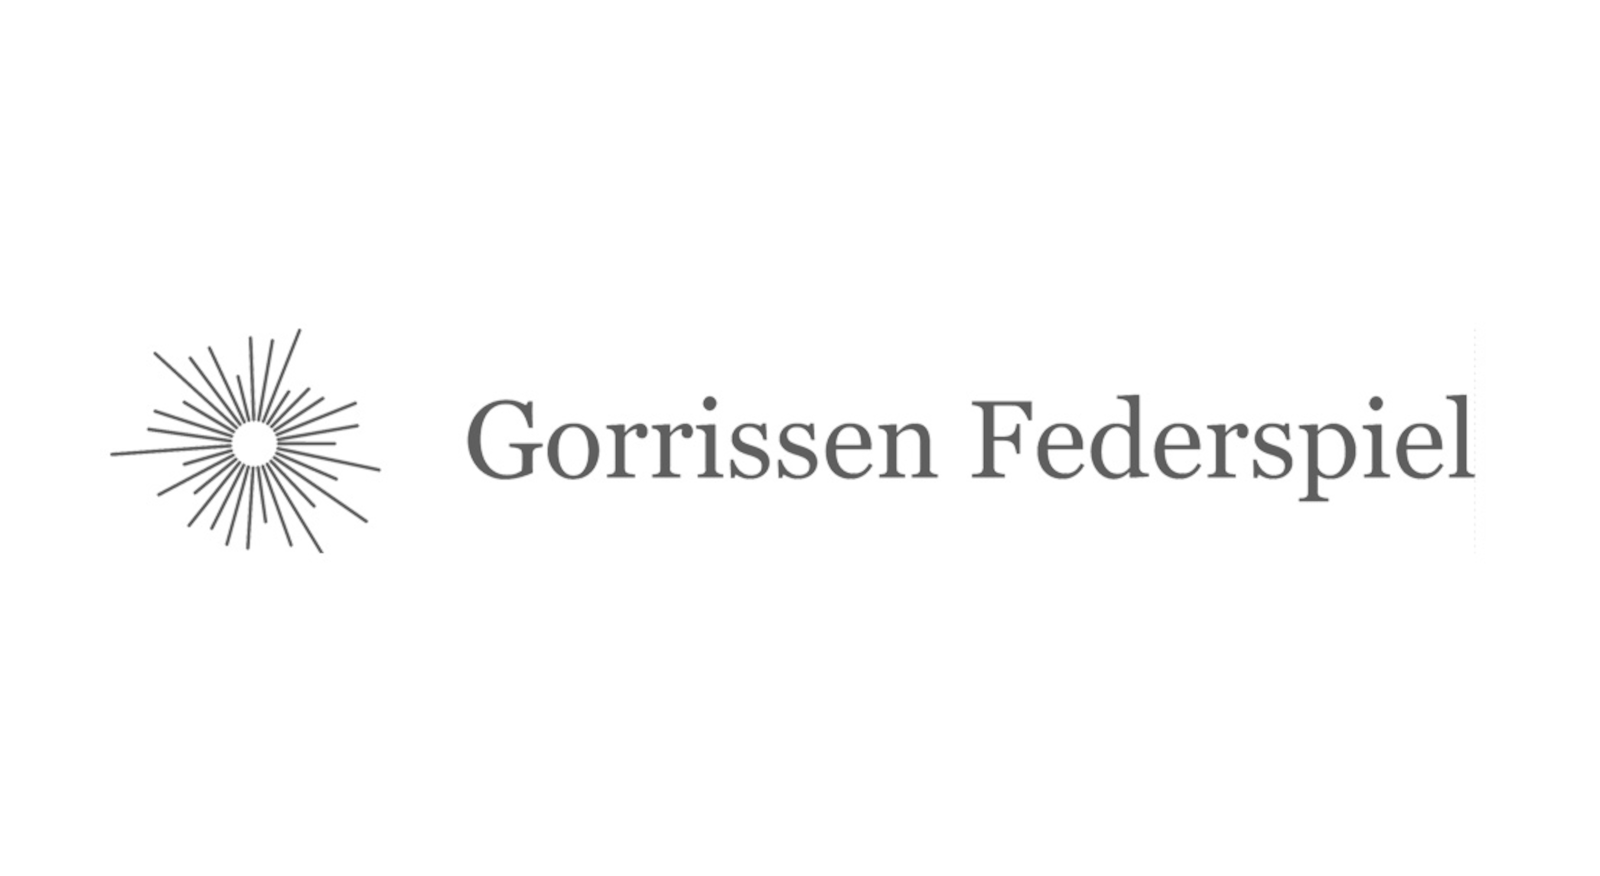 gorrissen-federspiel-grayscale